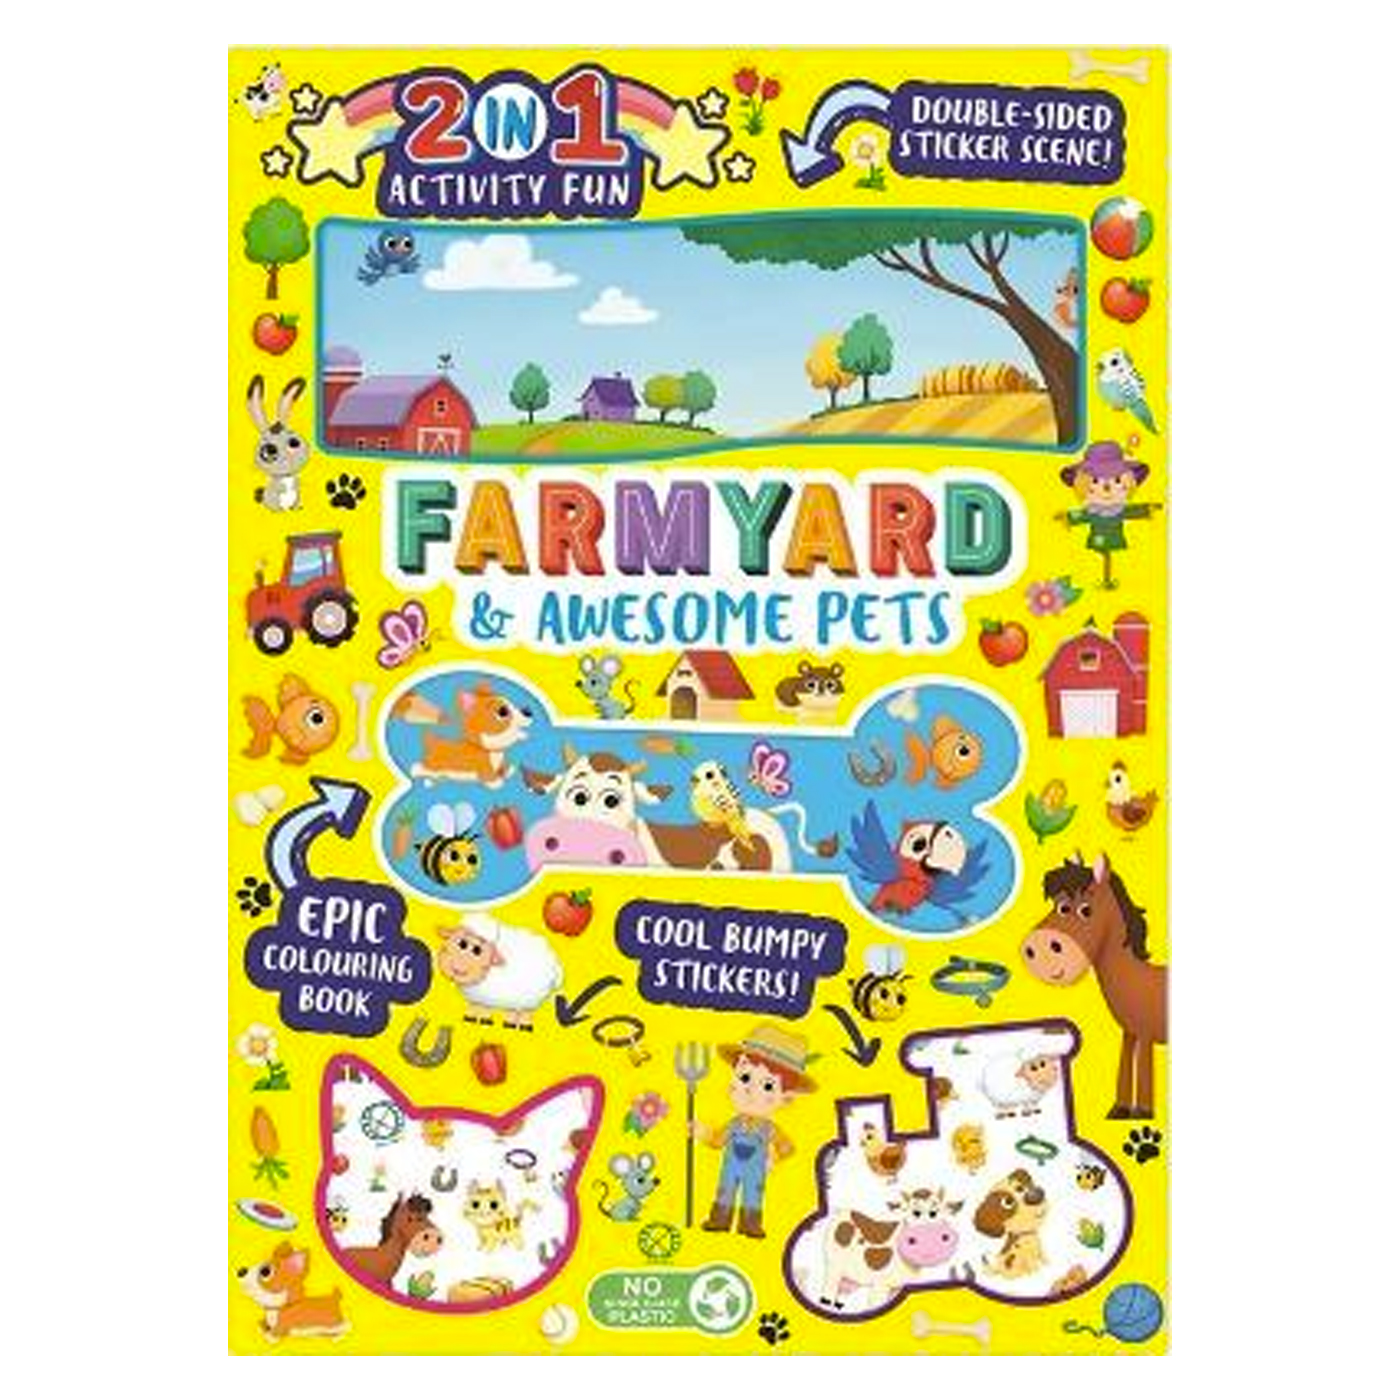  Farmyard & Awesome Pets